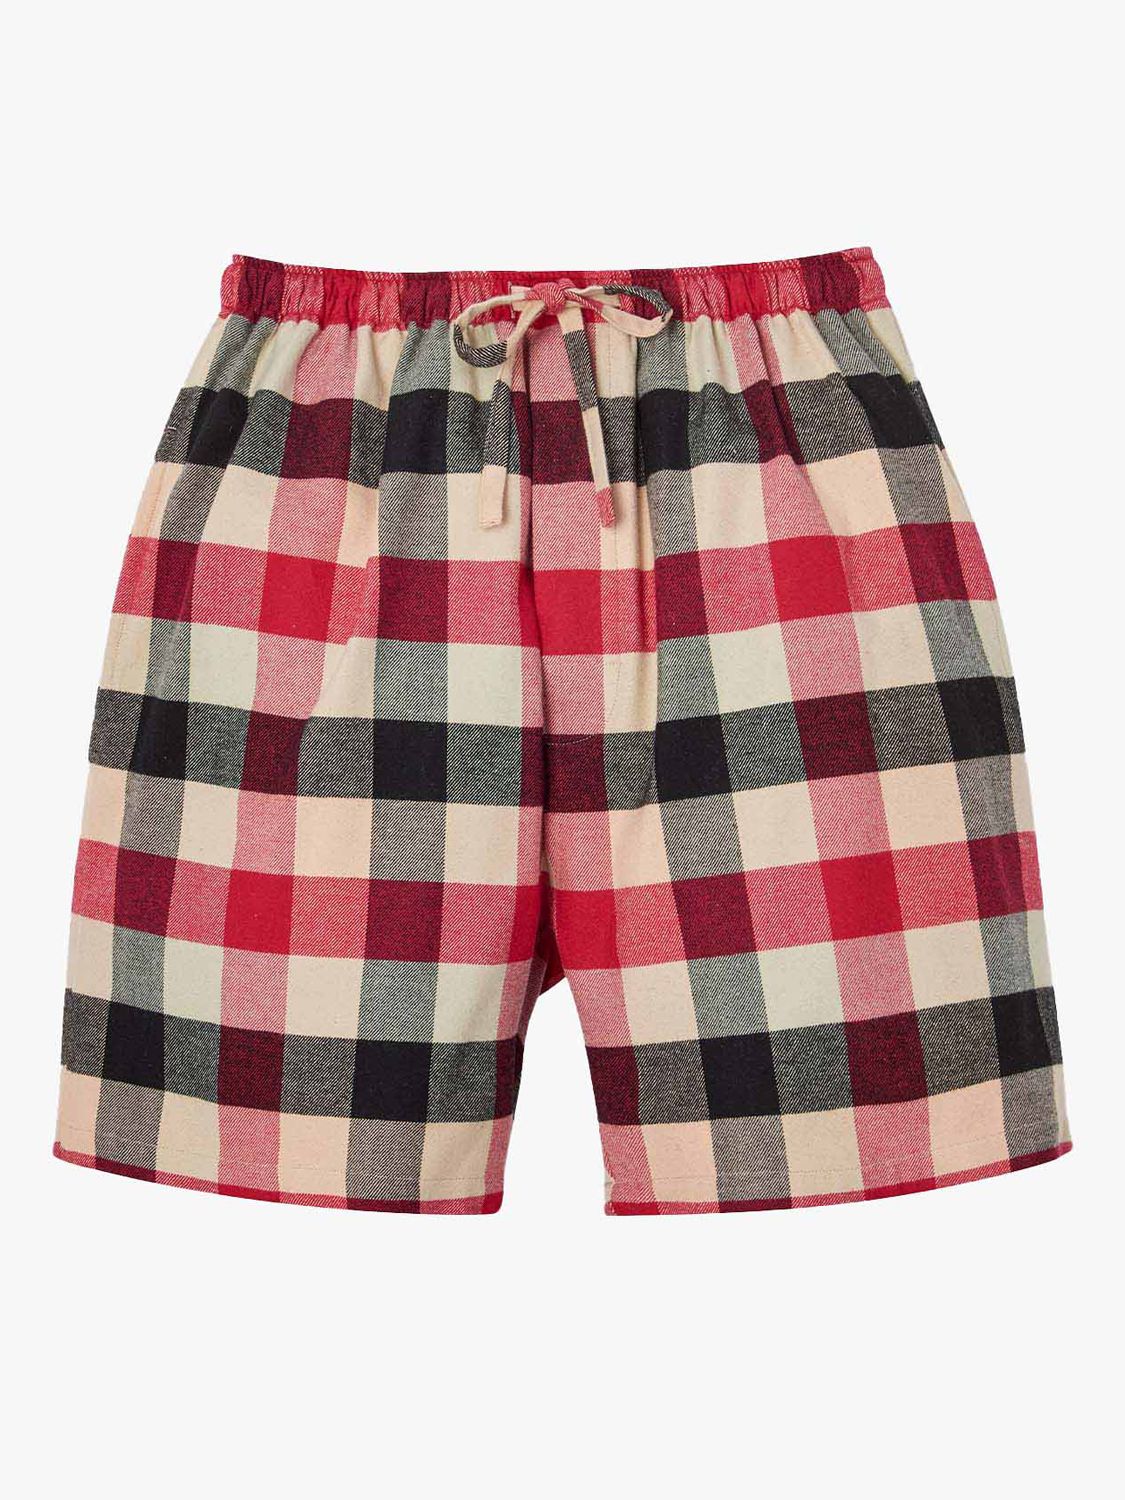 British Boxers Brushed Cotton Shire Check Pyjama Shorts, Red/Black, S